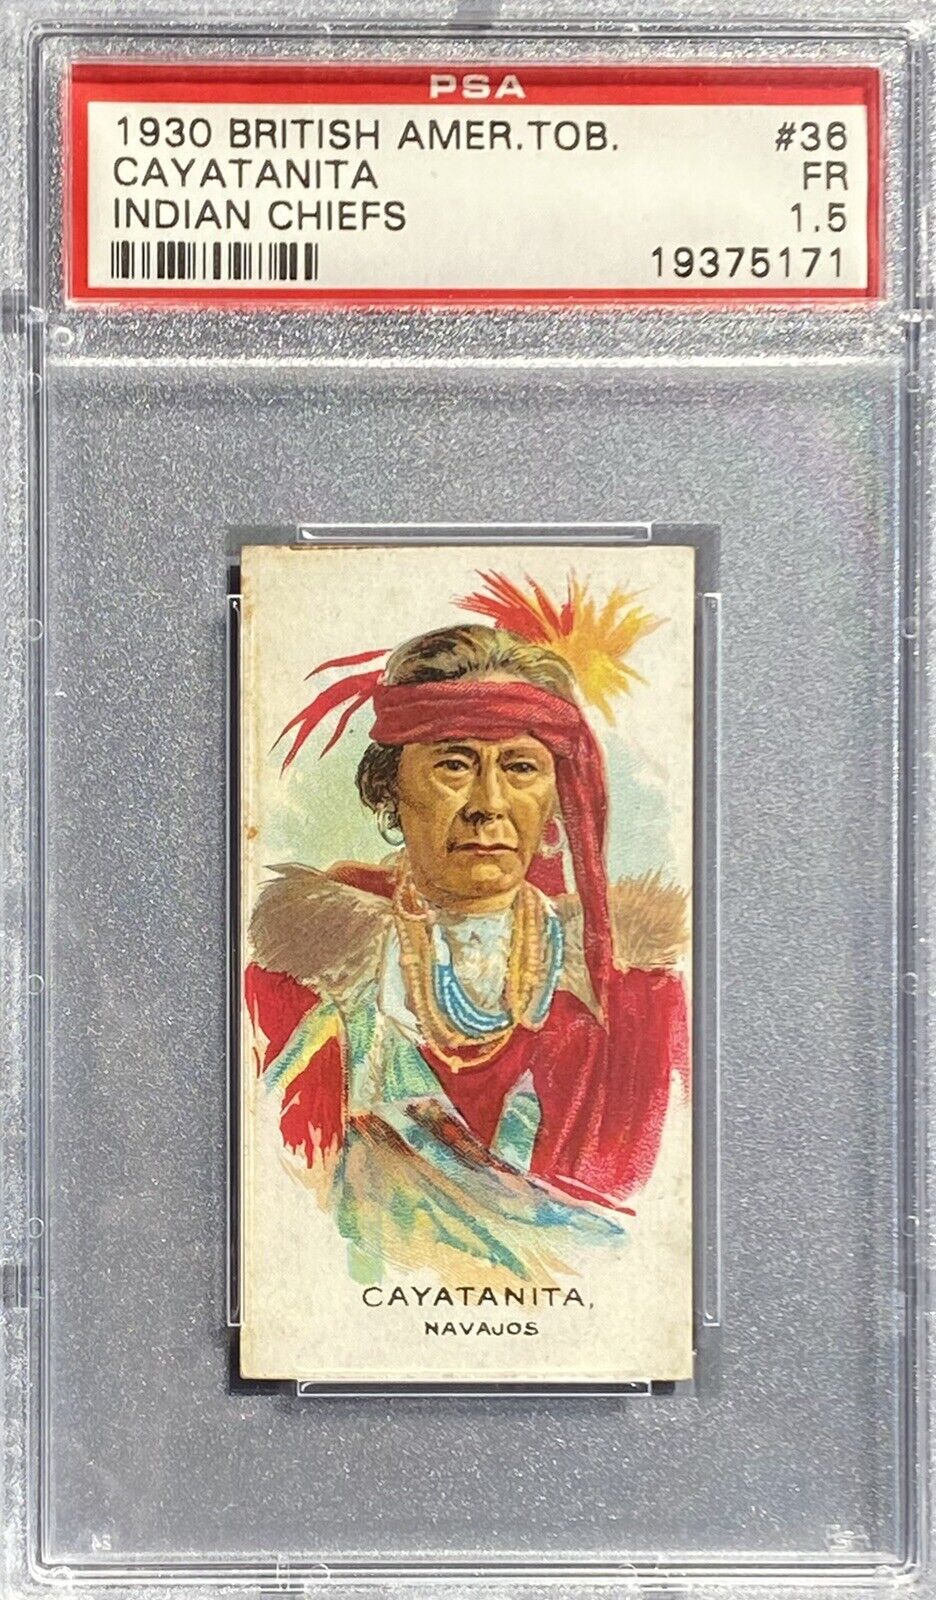 1930 BAT British American Tobacco Indian Chiefs CAYATANITA #36 PSA 1.5 FR